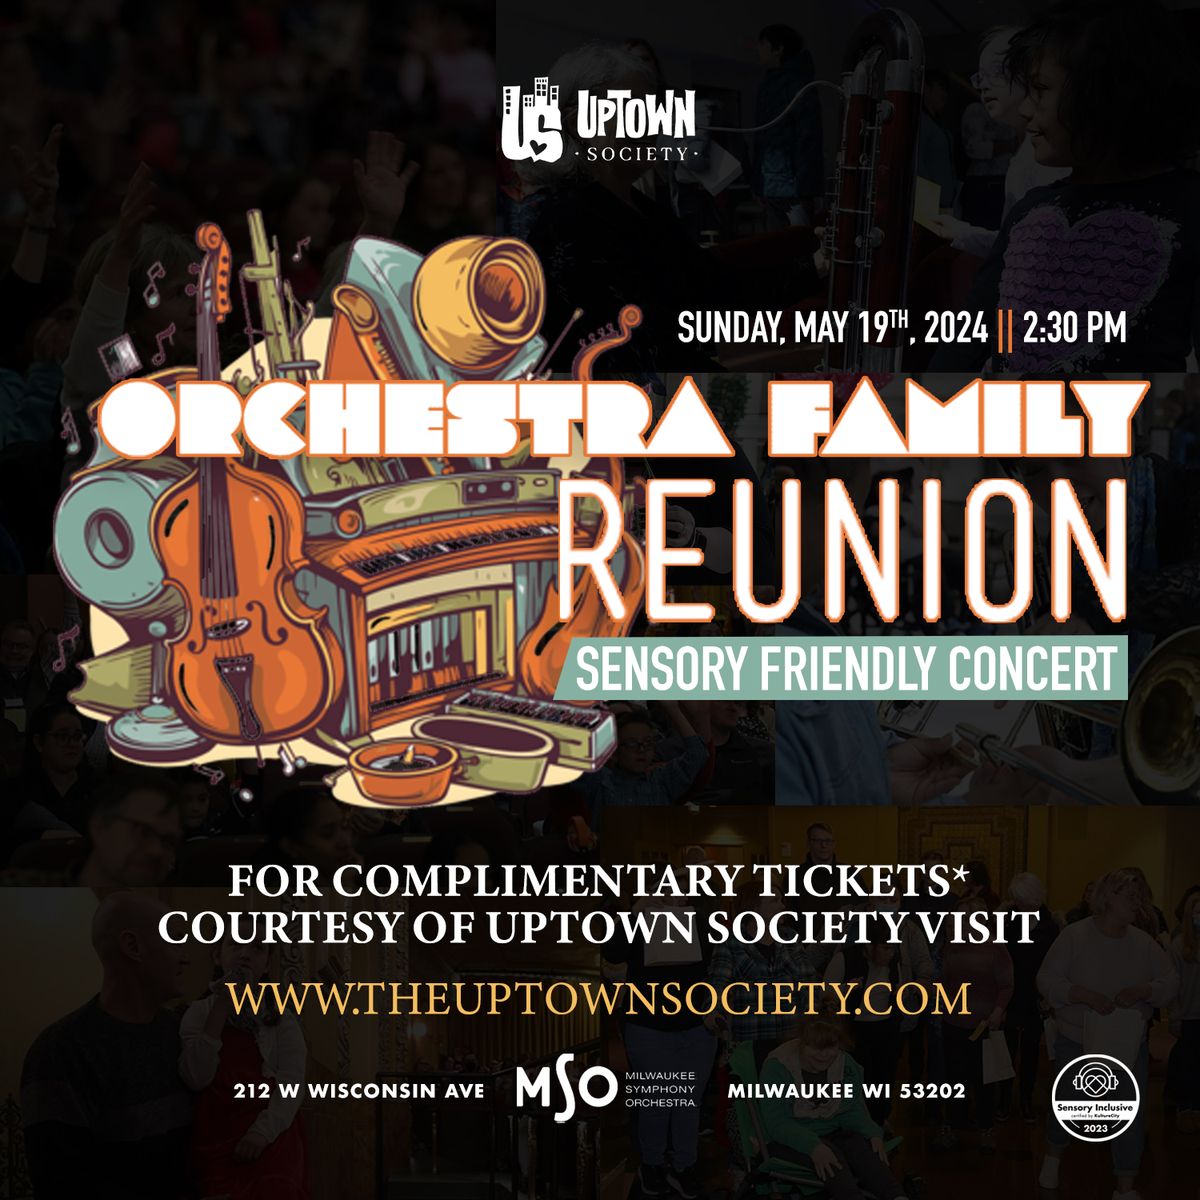 Orchestra Family Reunion: Sensory Friendly Concert